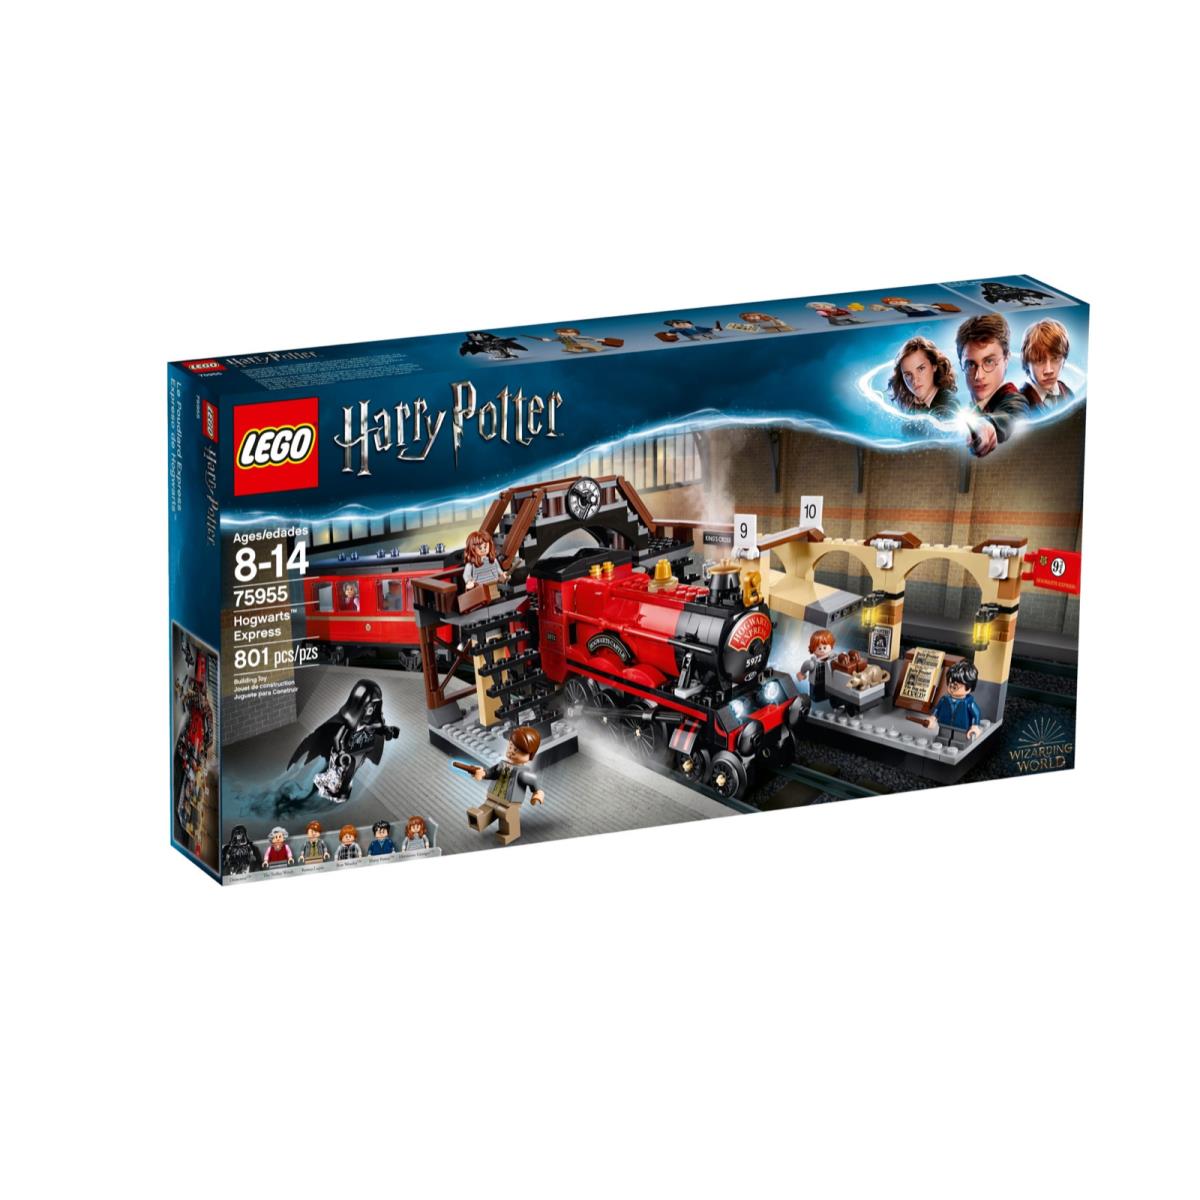 Lego Harry Potter Hogwarts Express 75955 Train Gift-free Immediate Shipping